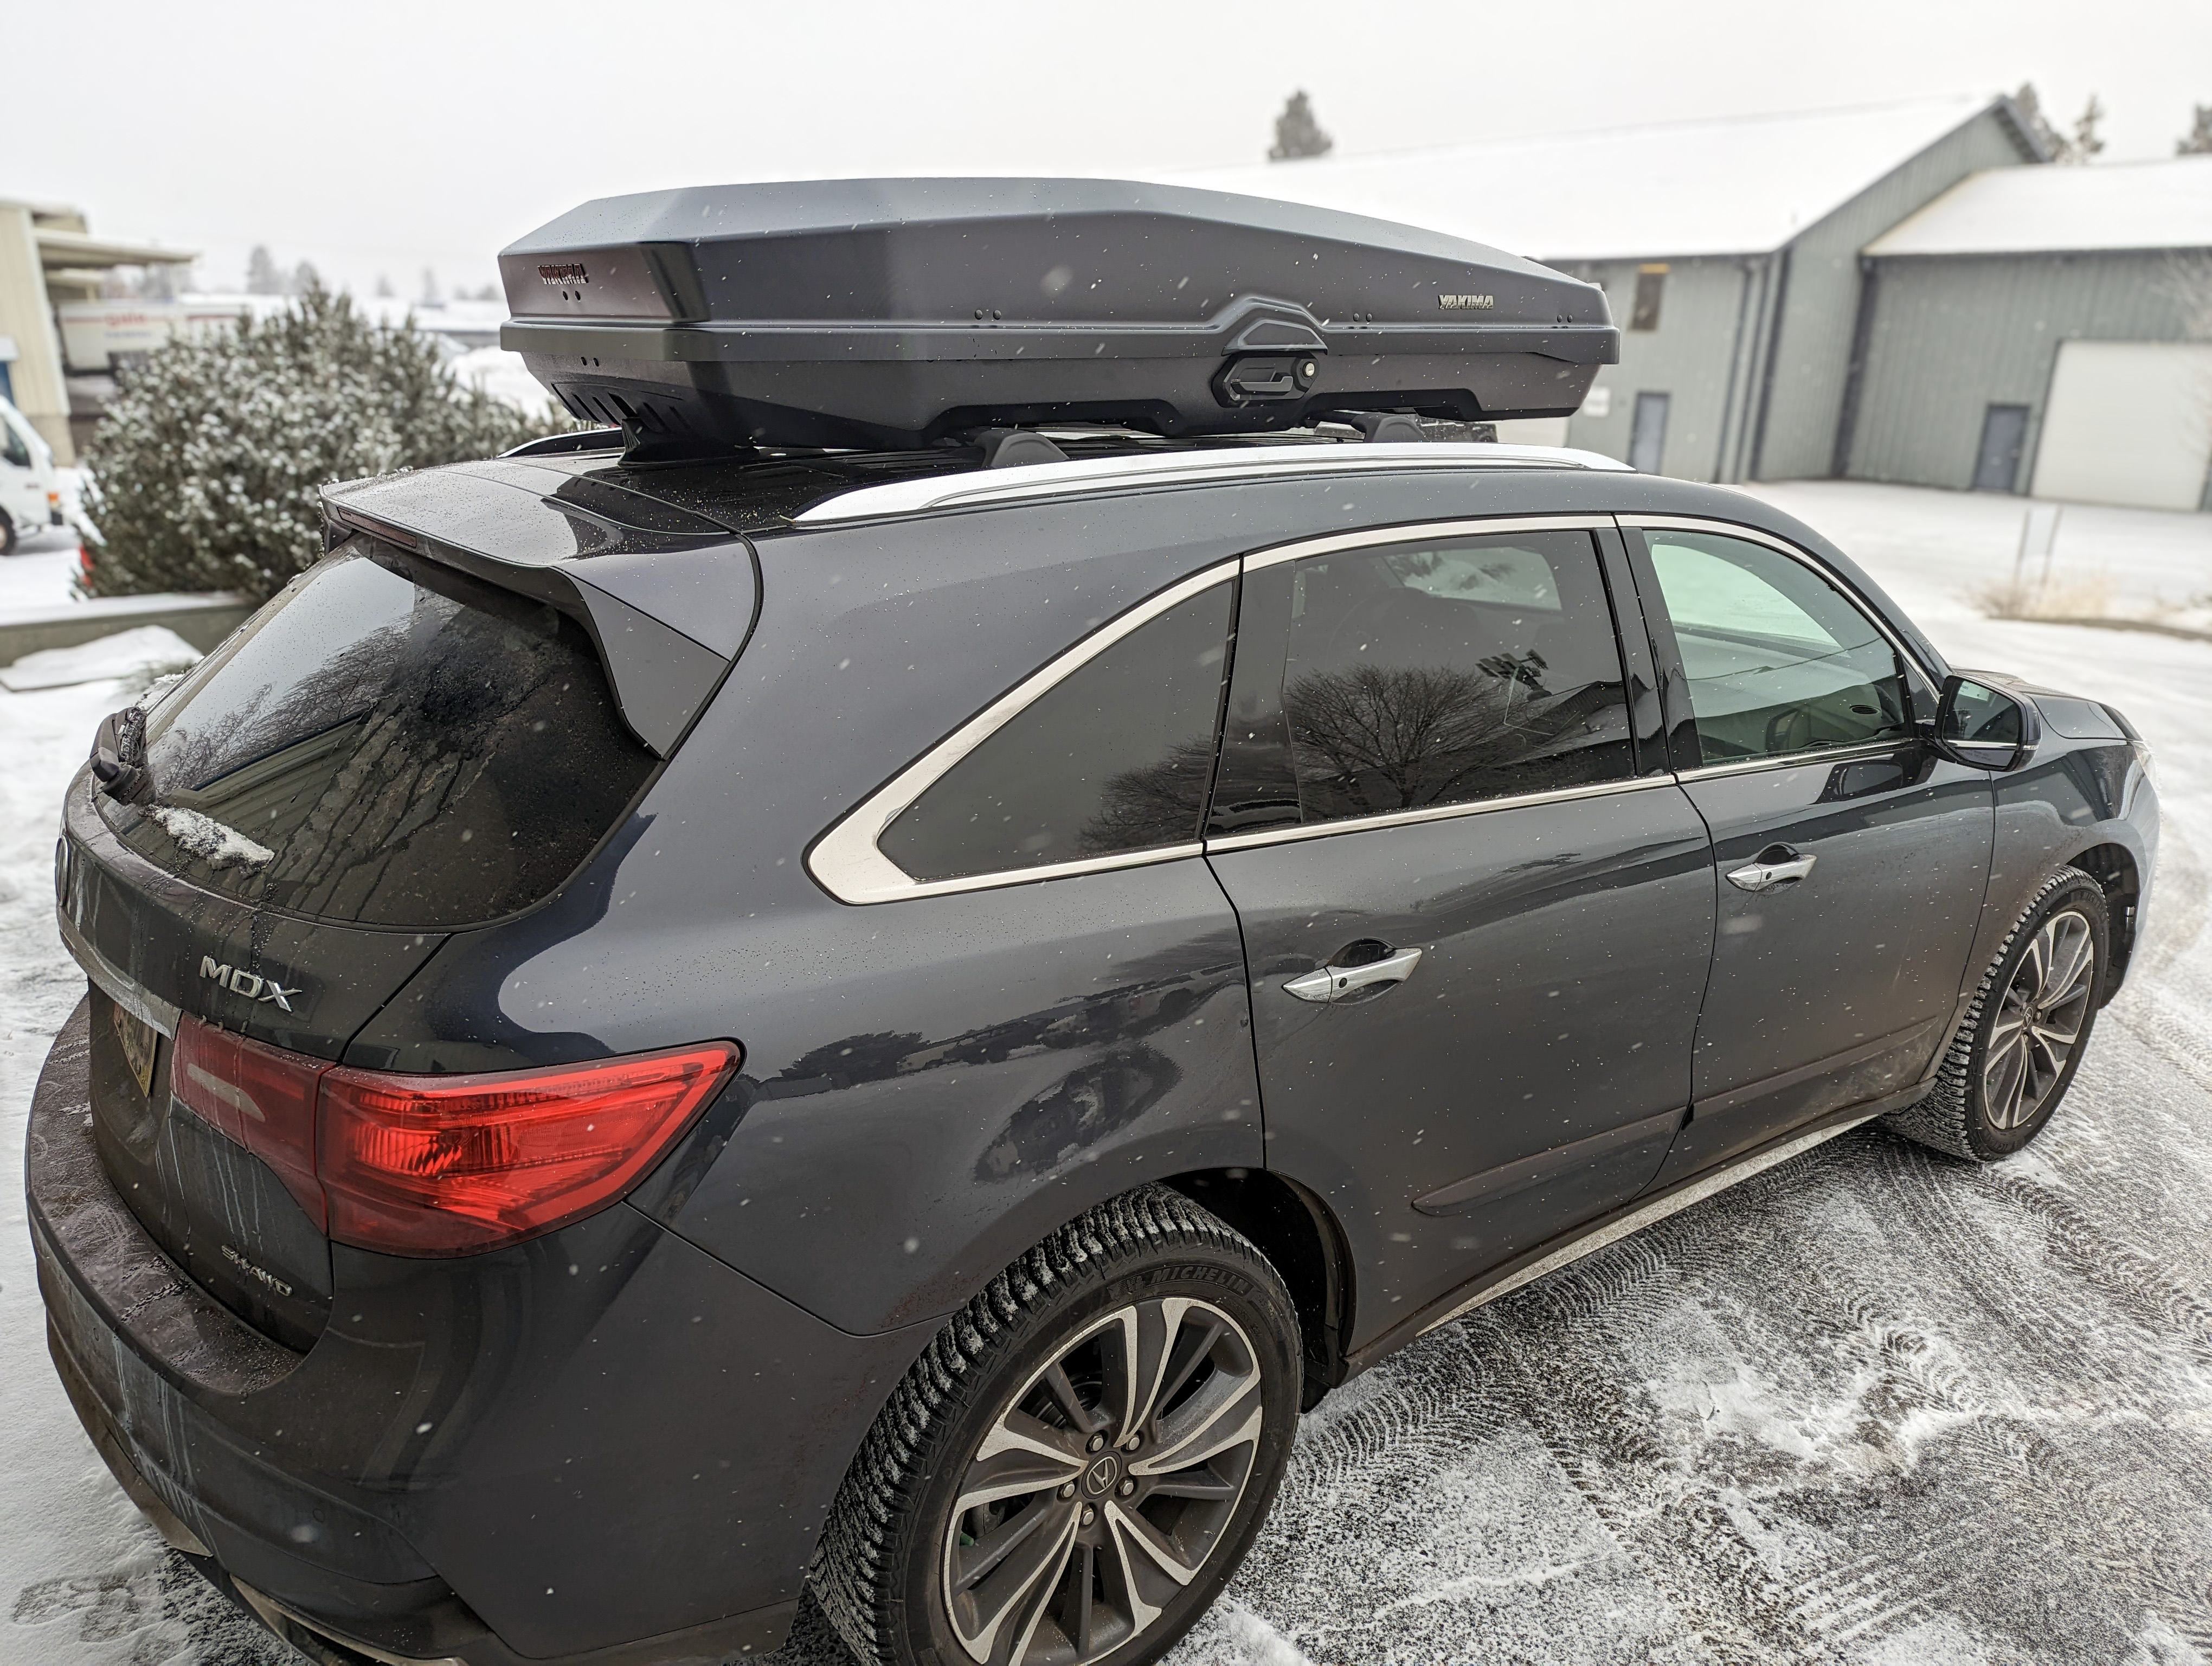 2018 Acura MDX - Roof Top Cargo Box - Yakima